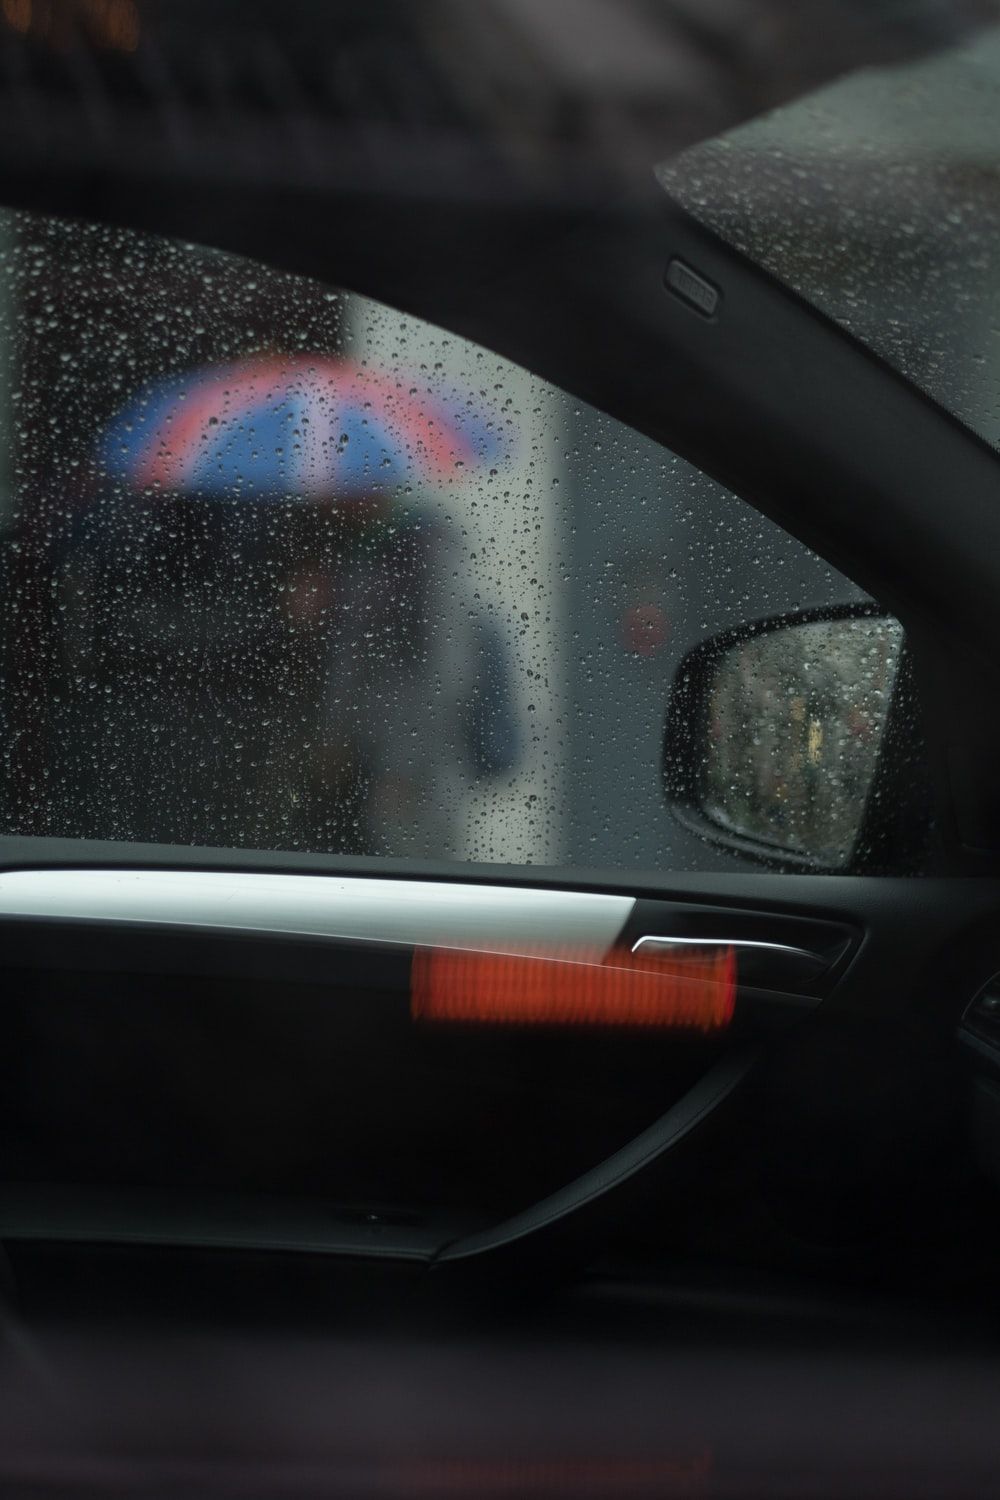 Car Rain Picture. Download Free Image